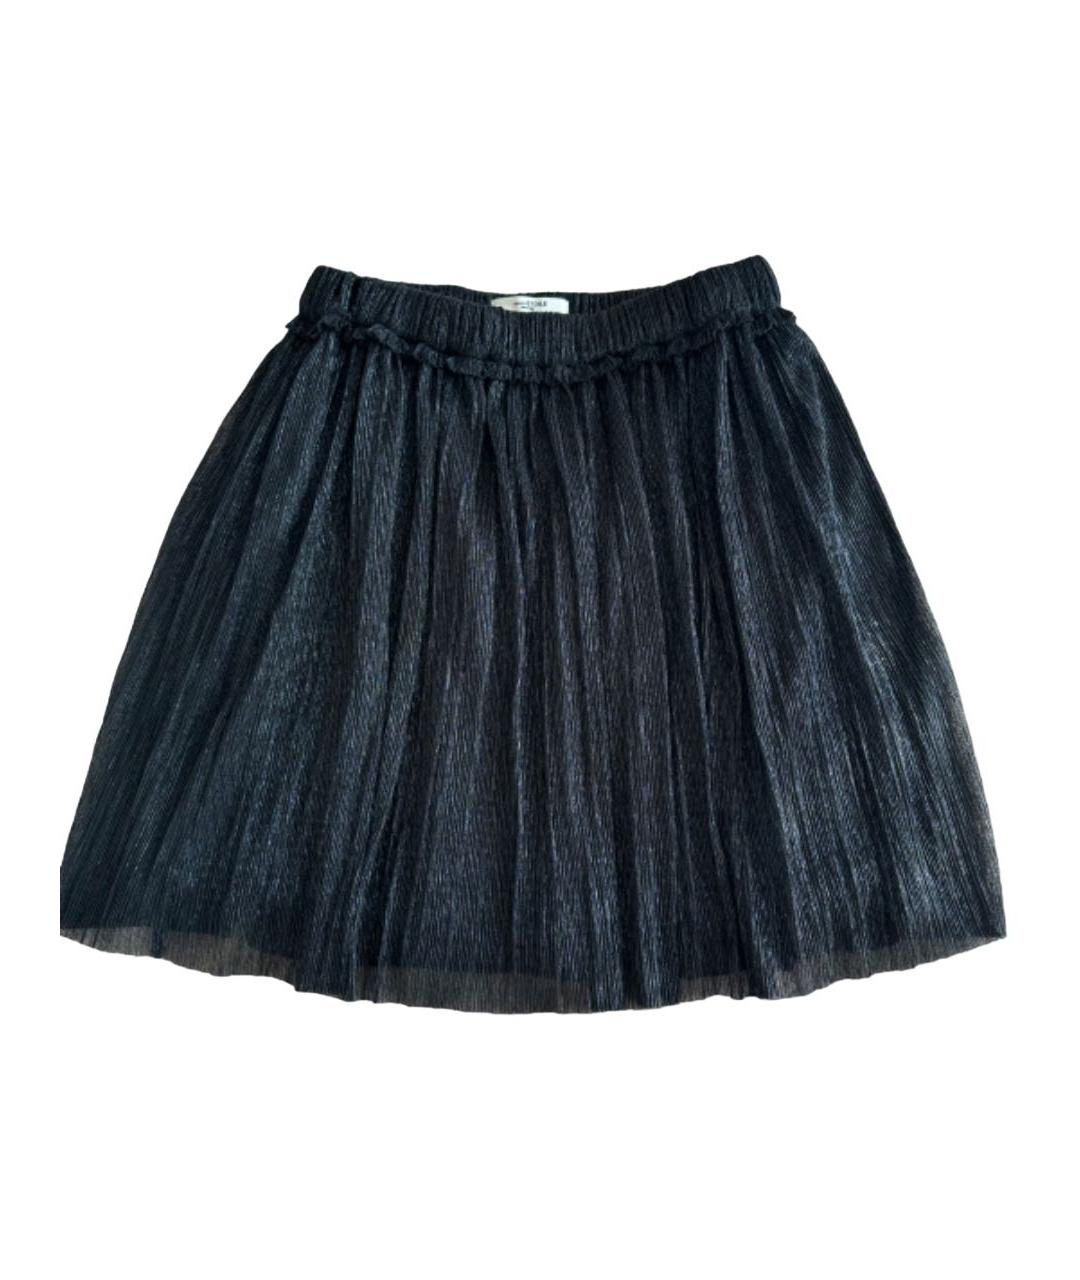 ISABEL MARANT ETOILE Черная полиэстеровая юбка мини, фото 1